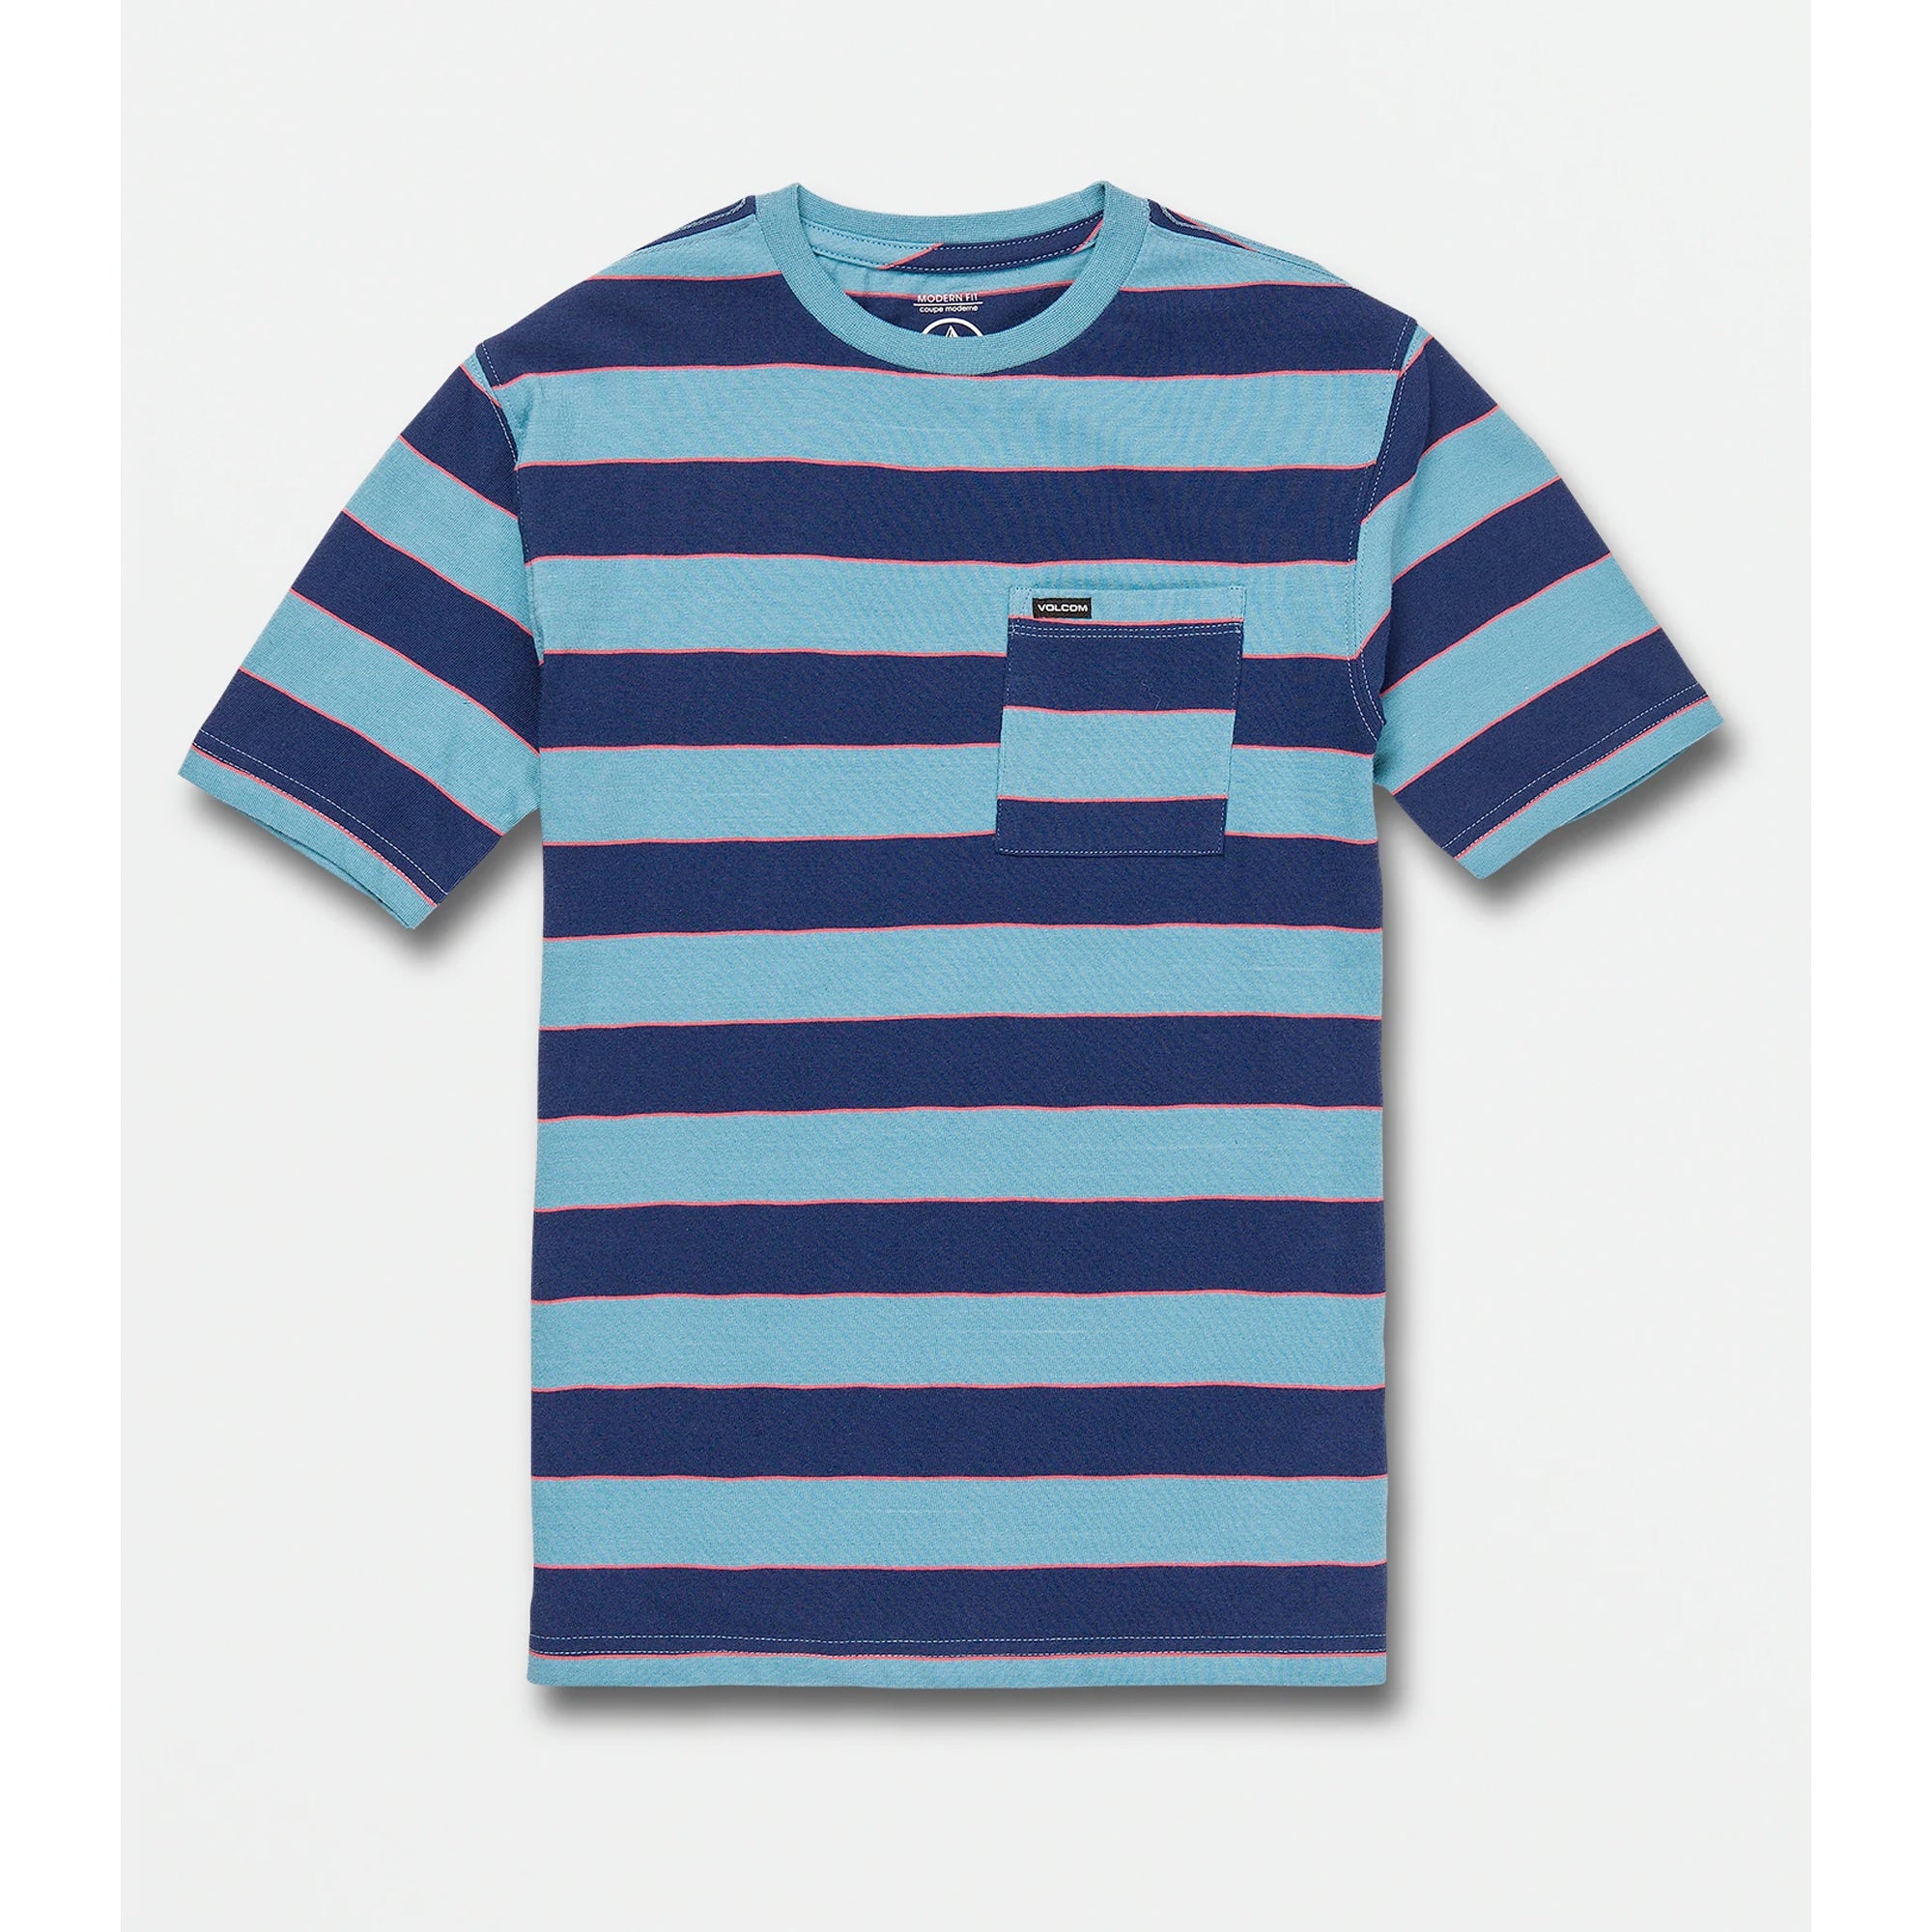 Volcom Maxer Stripe Youth Boy's Crew S/S T-Shirt